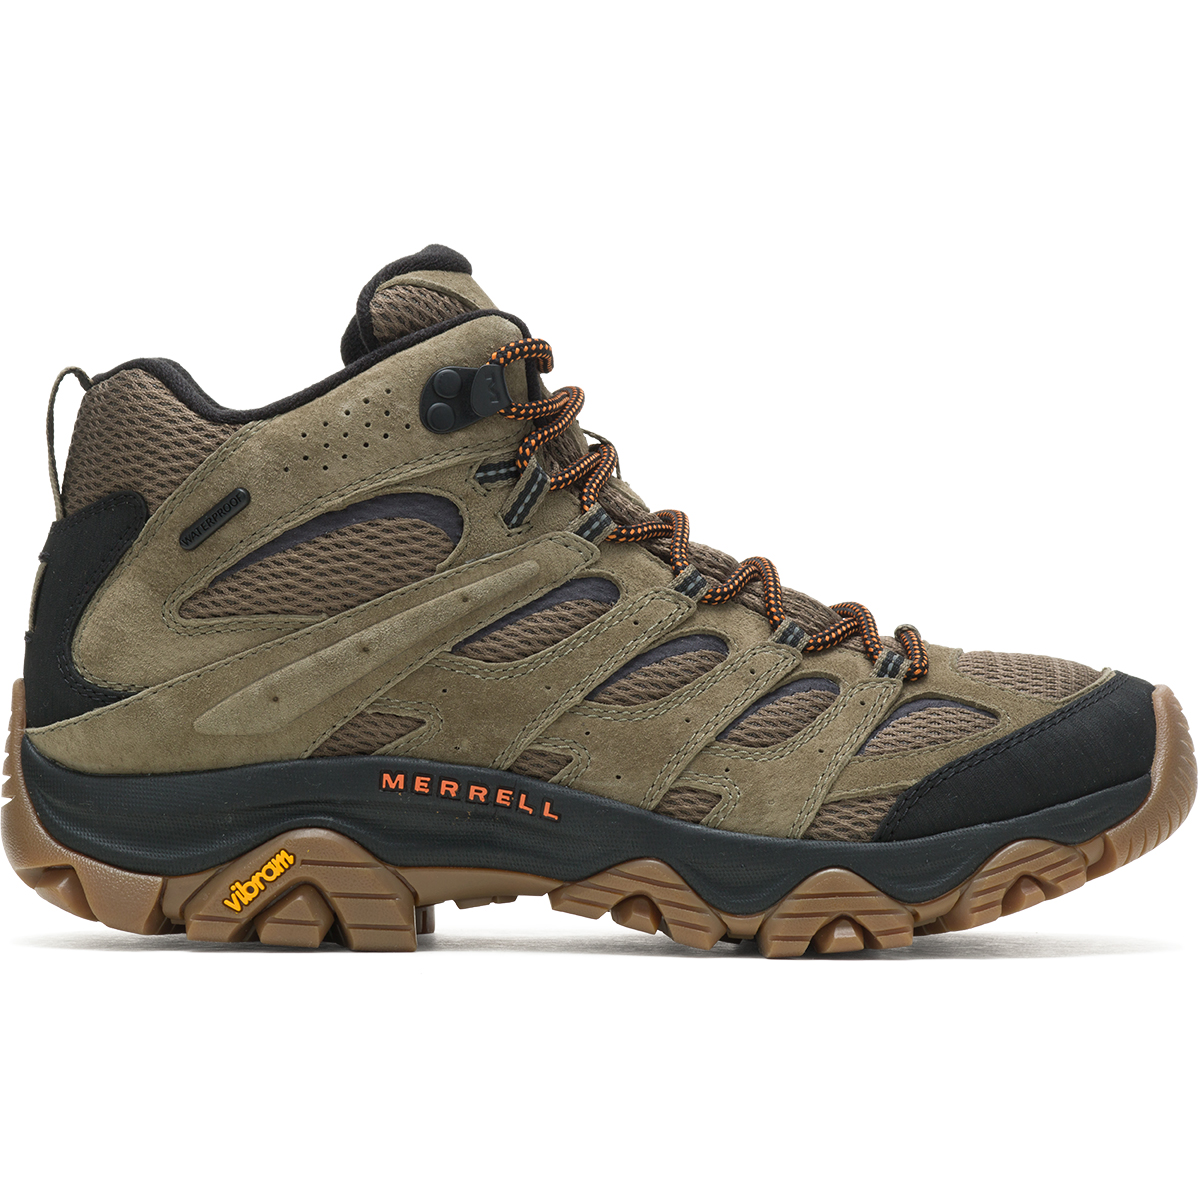 Merrell Men's Moab 3 Mid Waterproof Hiking Boots, Wide